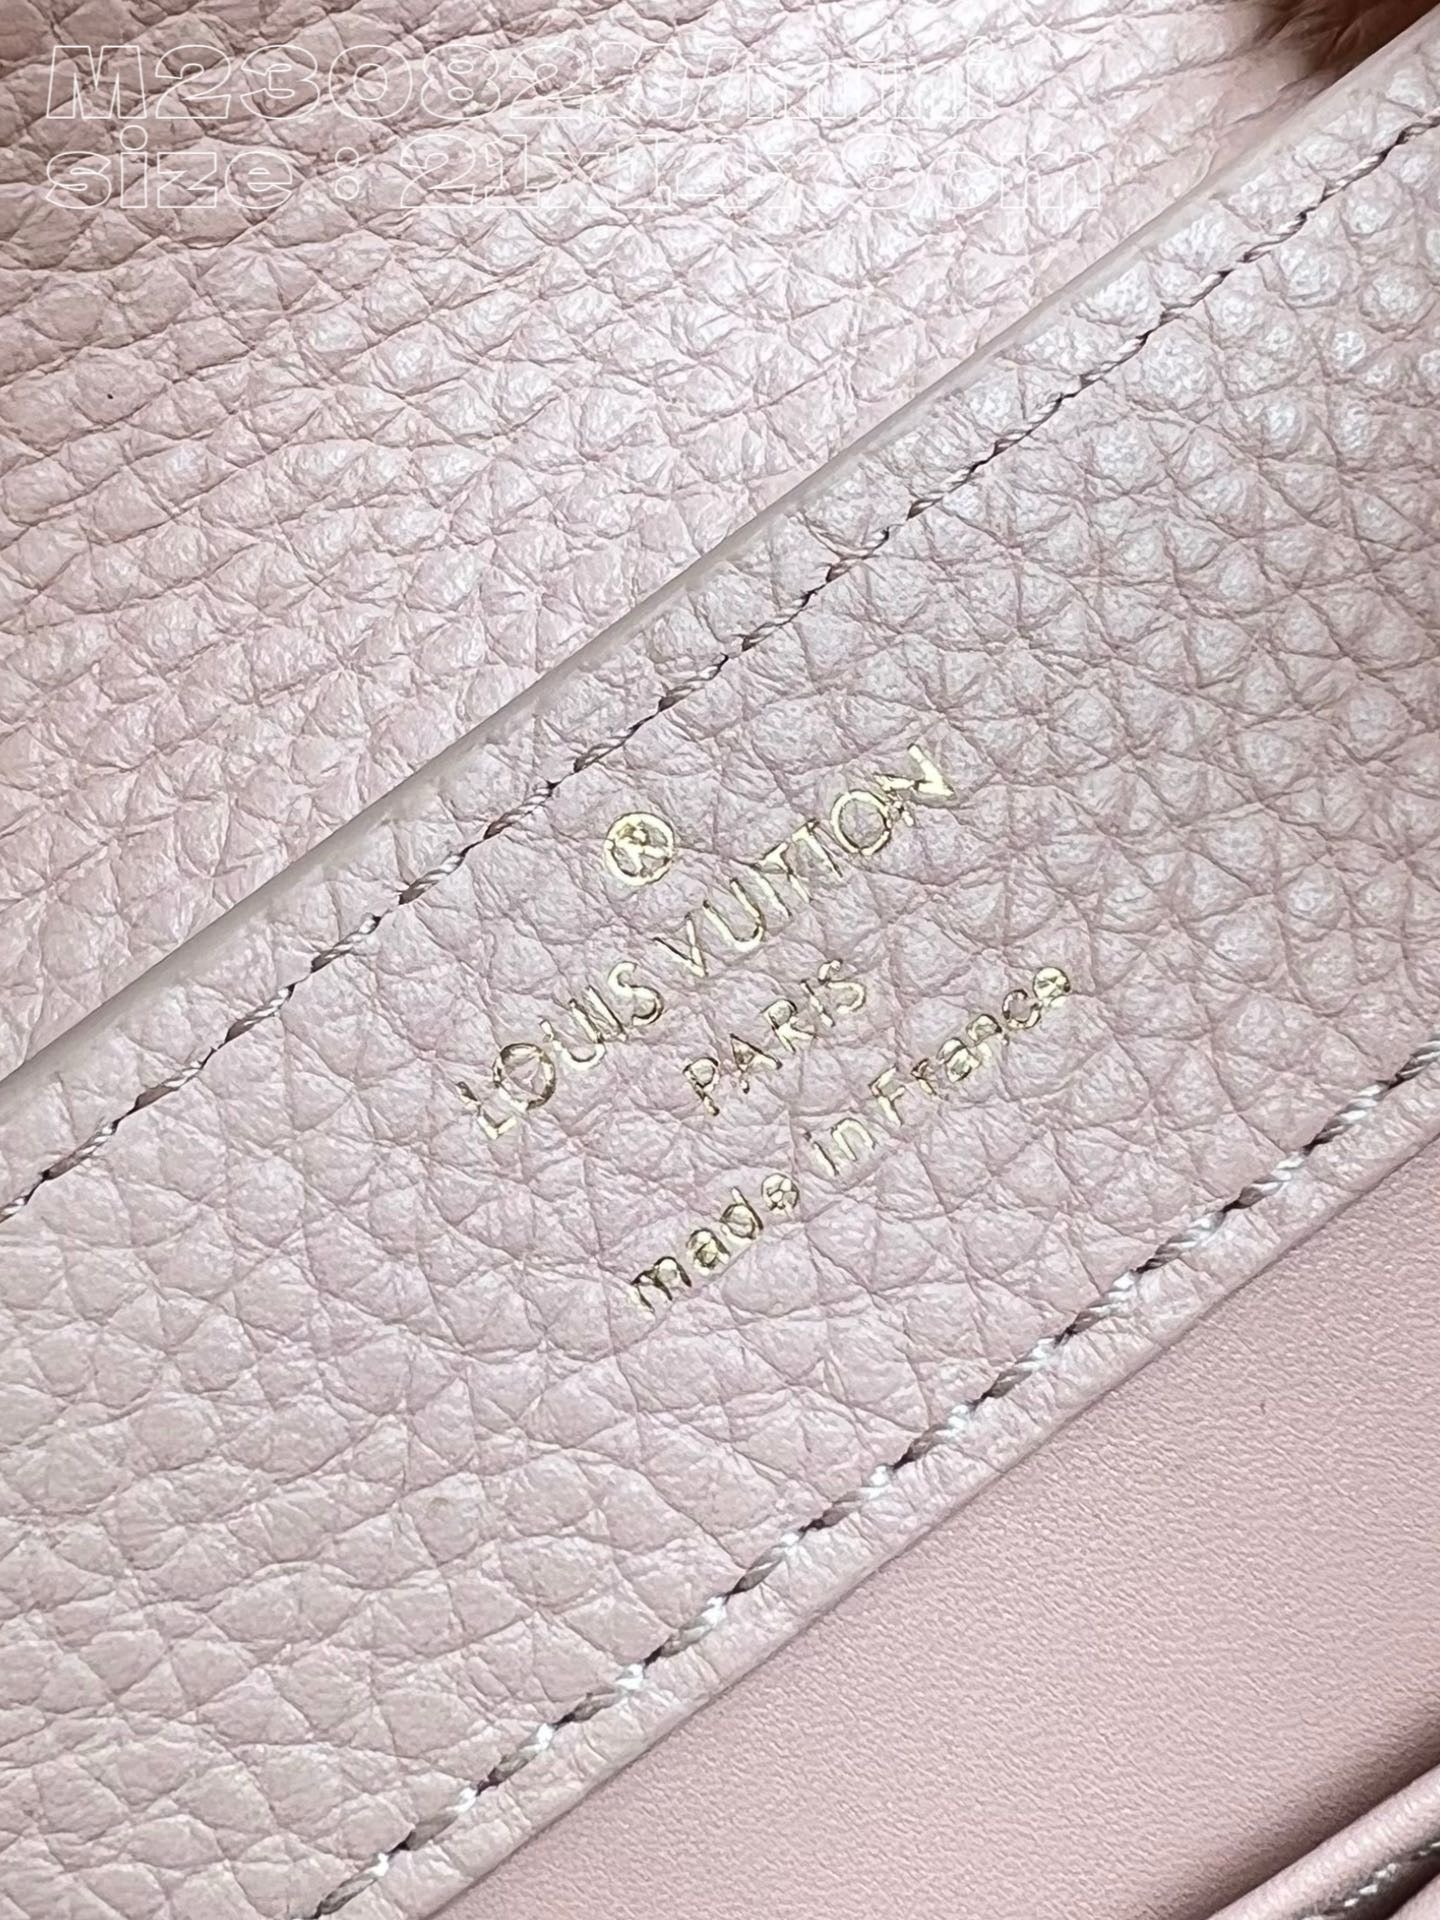 Louis Vuitton Capucines Mini Baby Pink High Grade